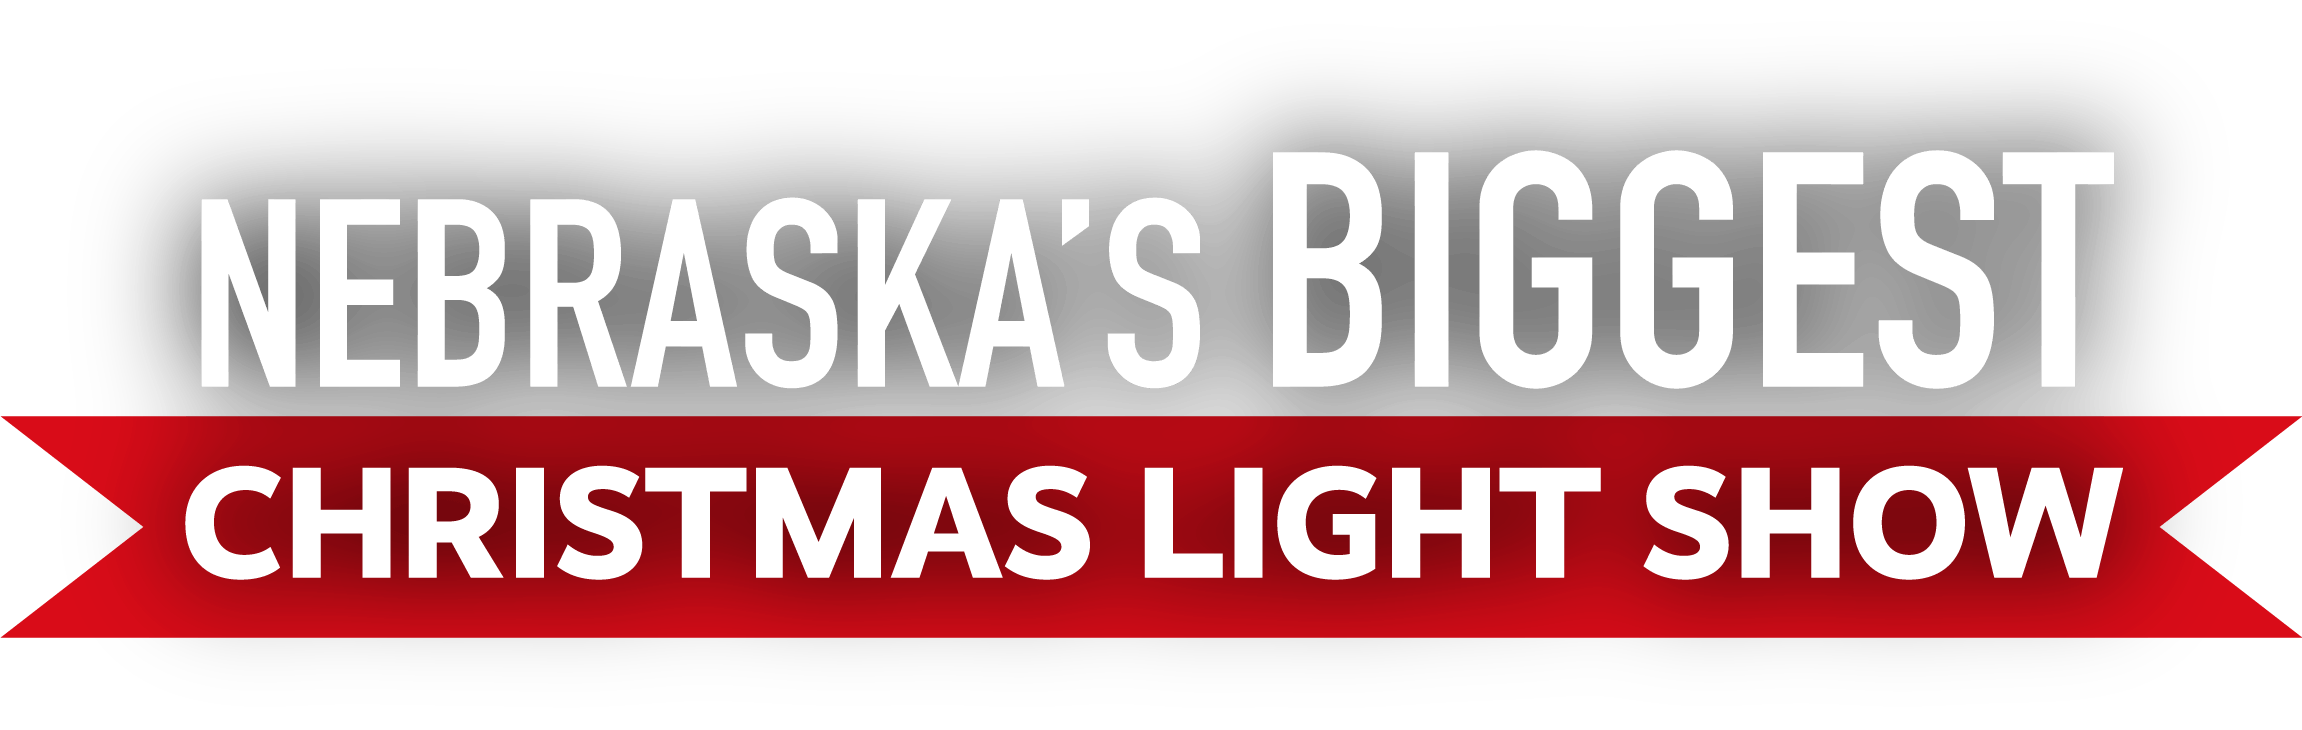 Nebraska's Biggest Light Show Graphic for the Christmas Lights in Lincoln Nebraska events sponsored by Magical Lights of Lincoln.